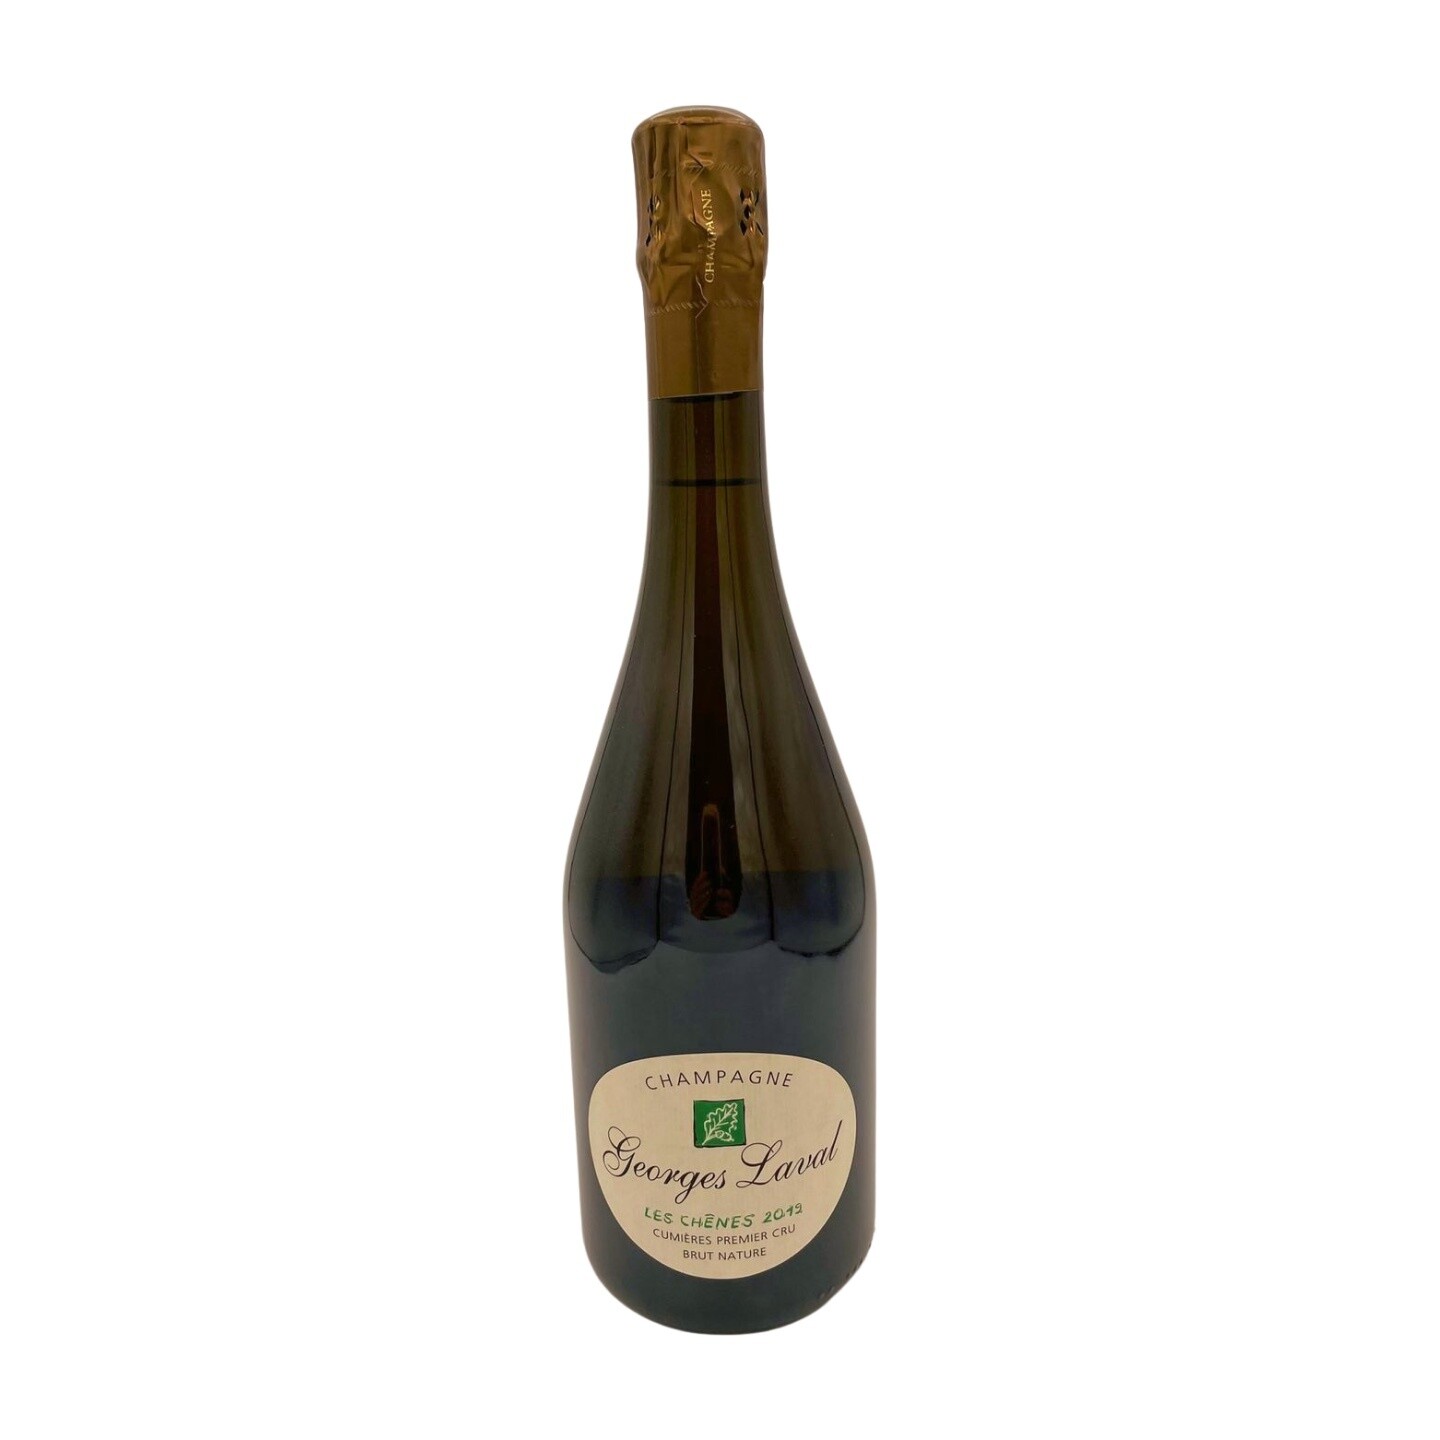 Georges Laval 'Les Chenes' Champagne Brut Nature 2019